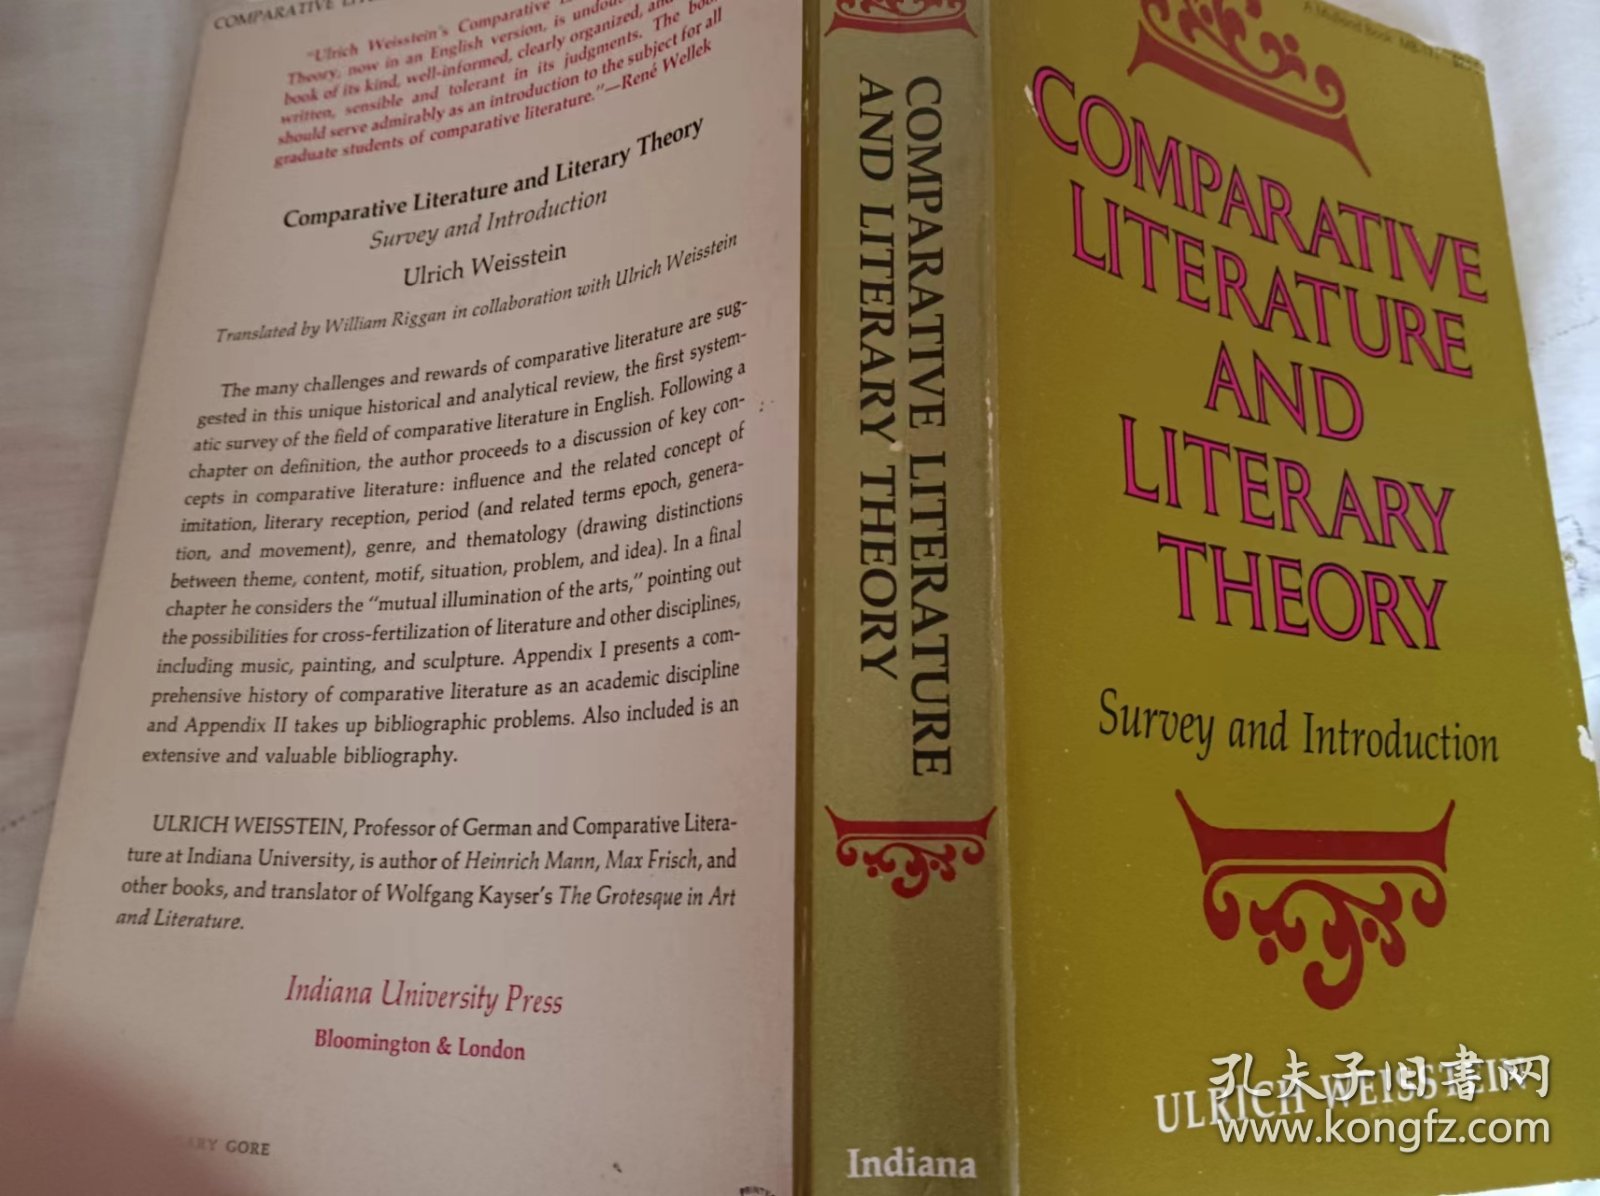 Comparative Literature and LiteraryTheory